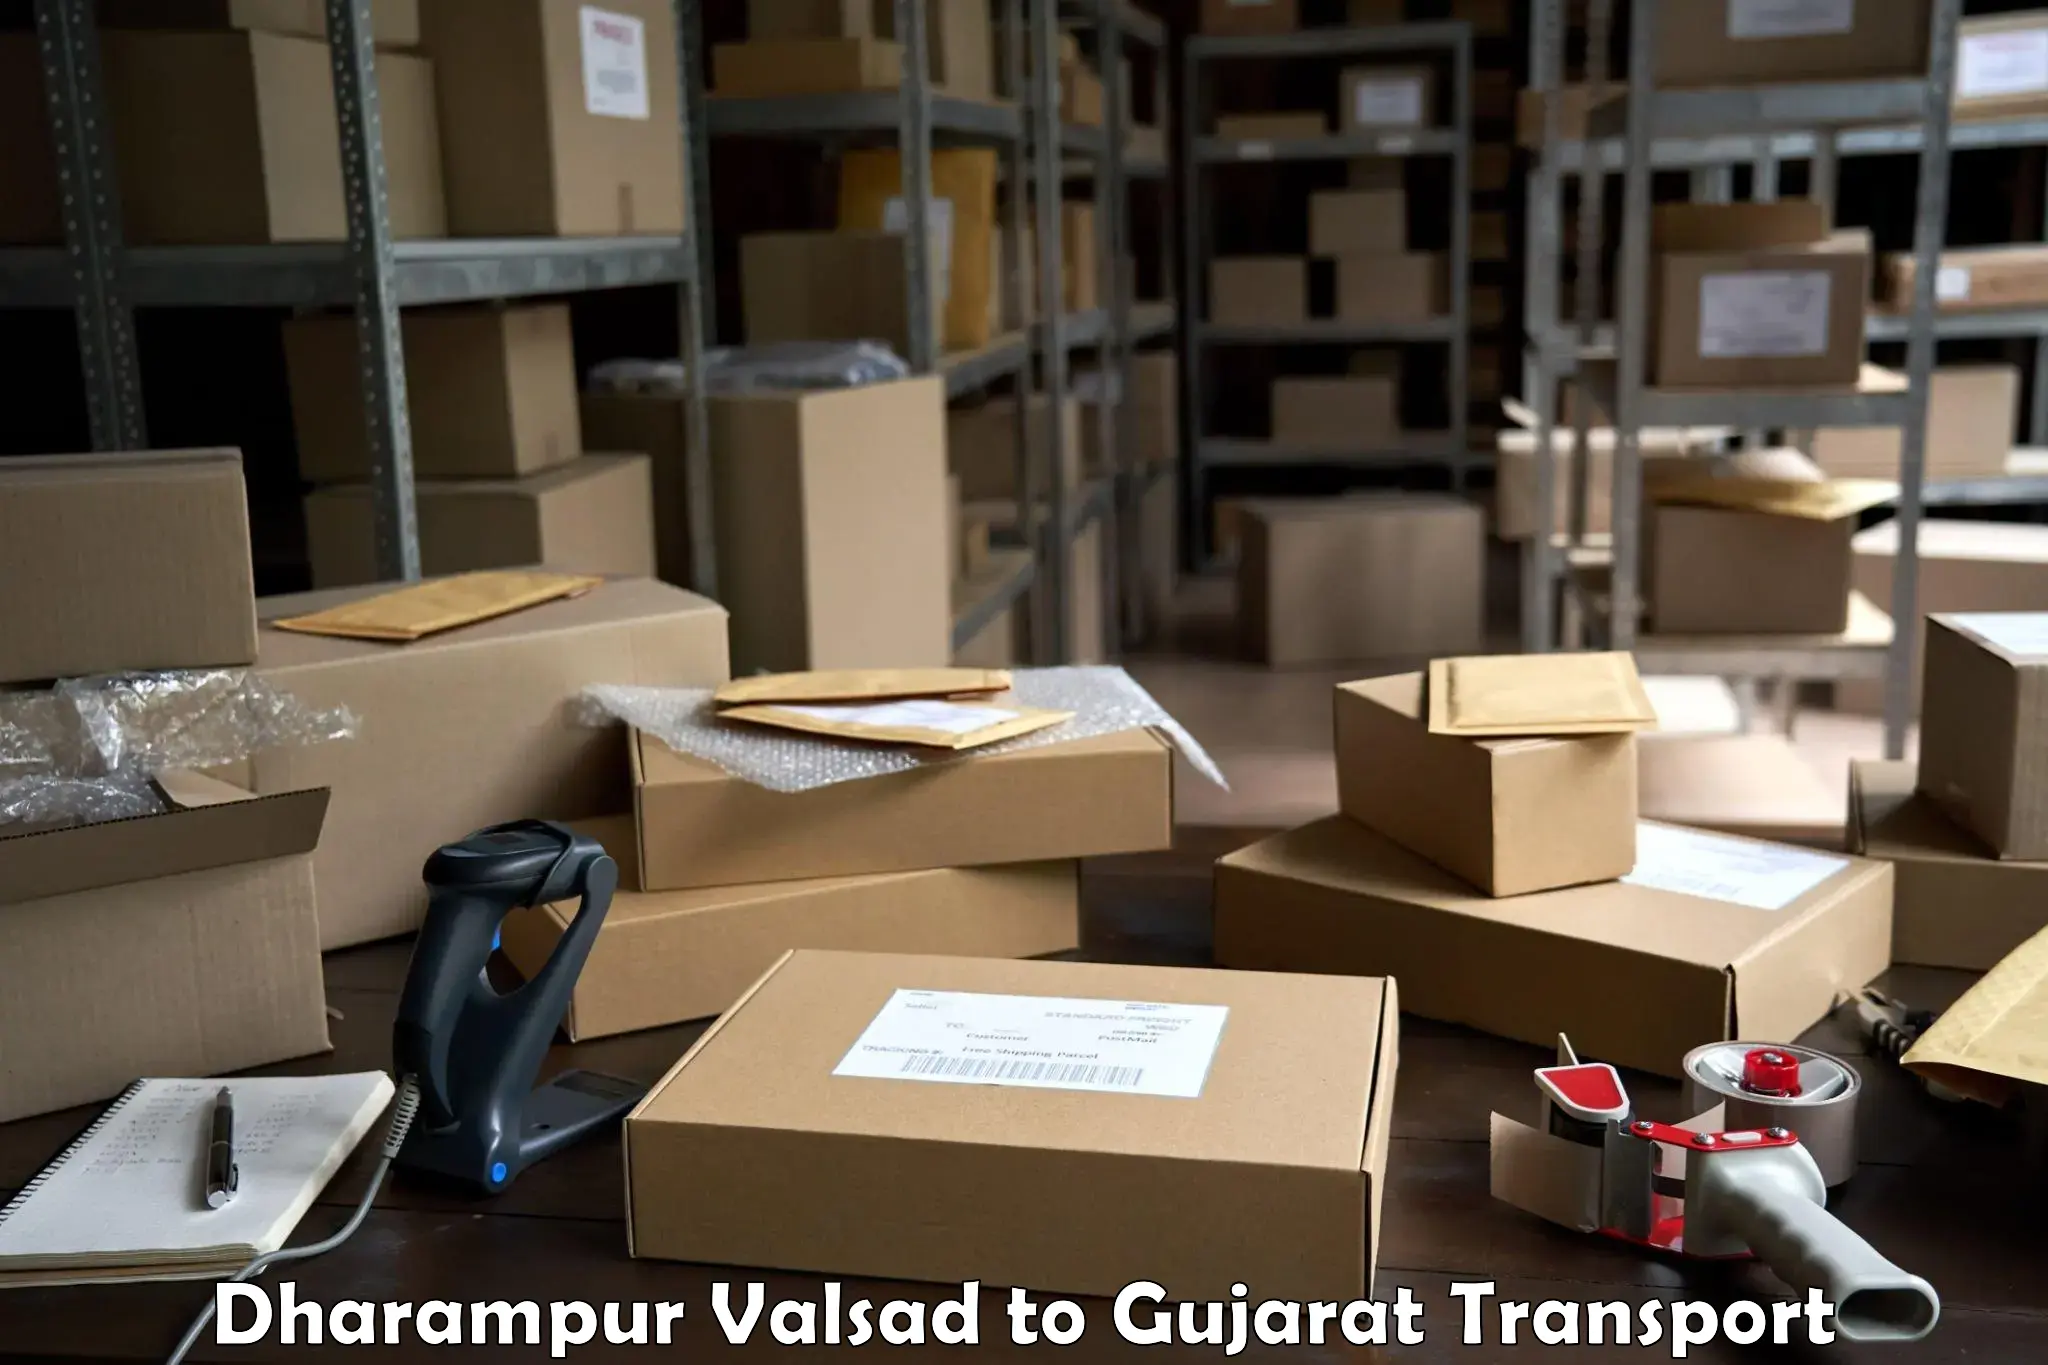 Furniture transport service Dharampur Valsad to GIDC